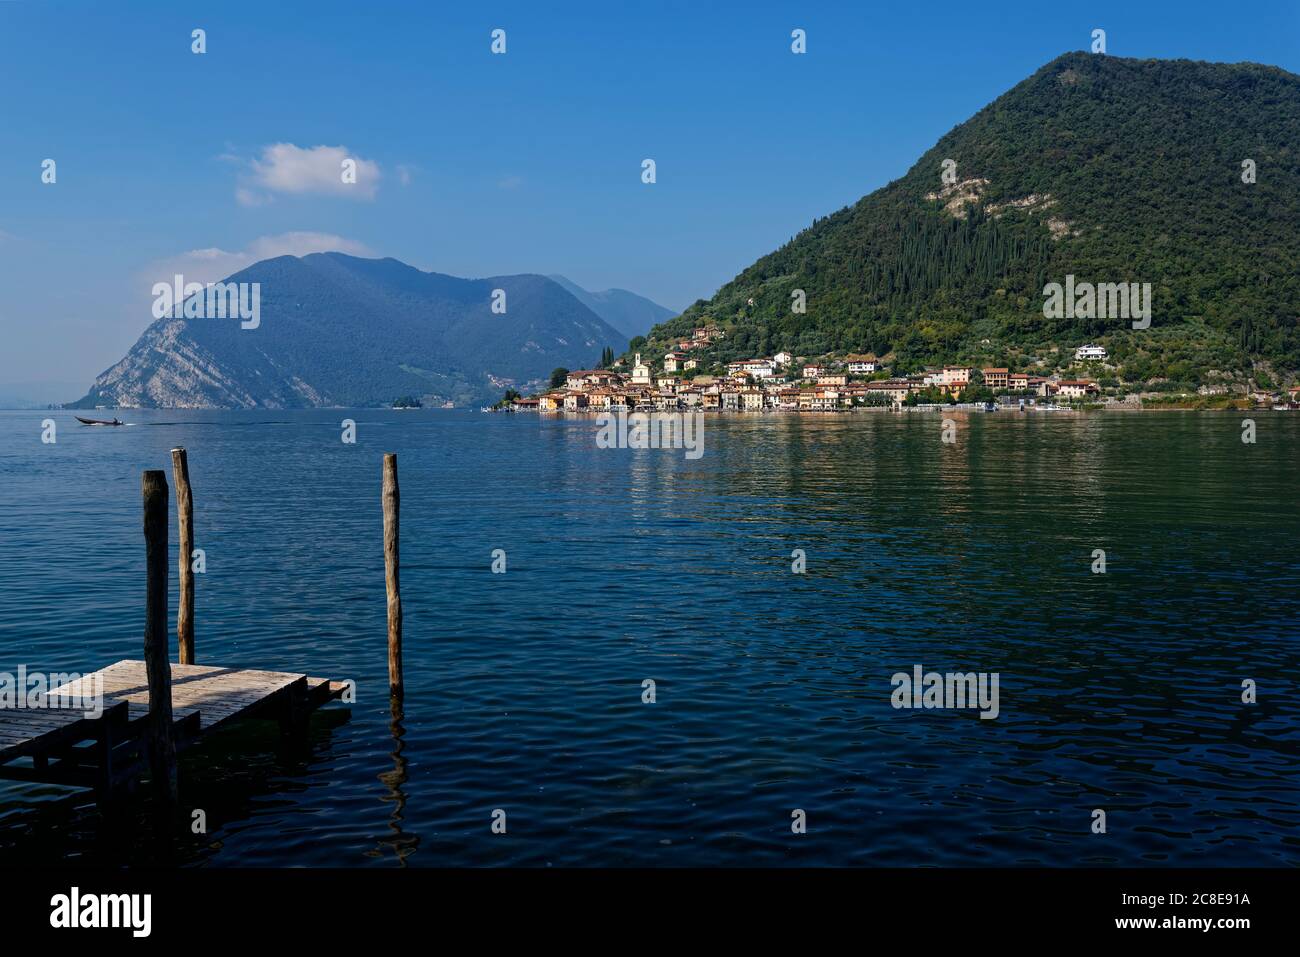 Italy, Lombardy, Monte Isola, Sulzano, Lake Iseo surrounded with mountains Stock Photo